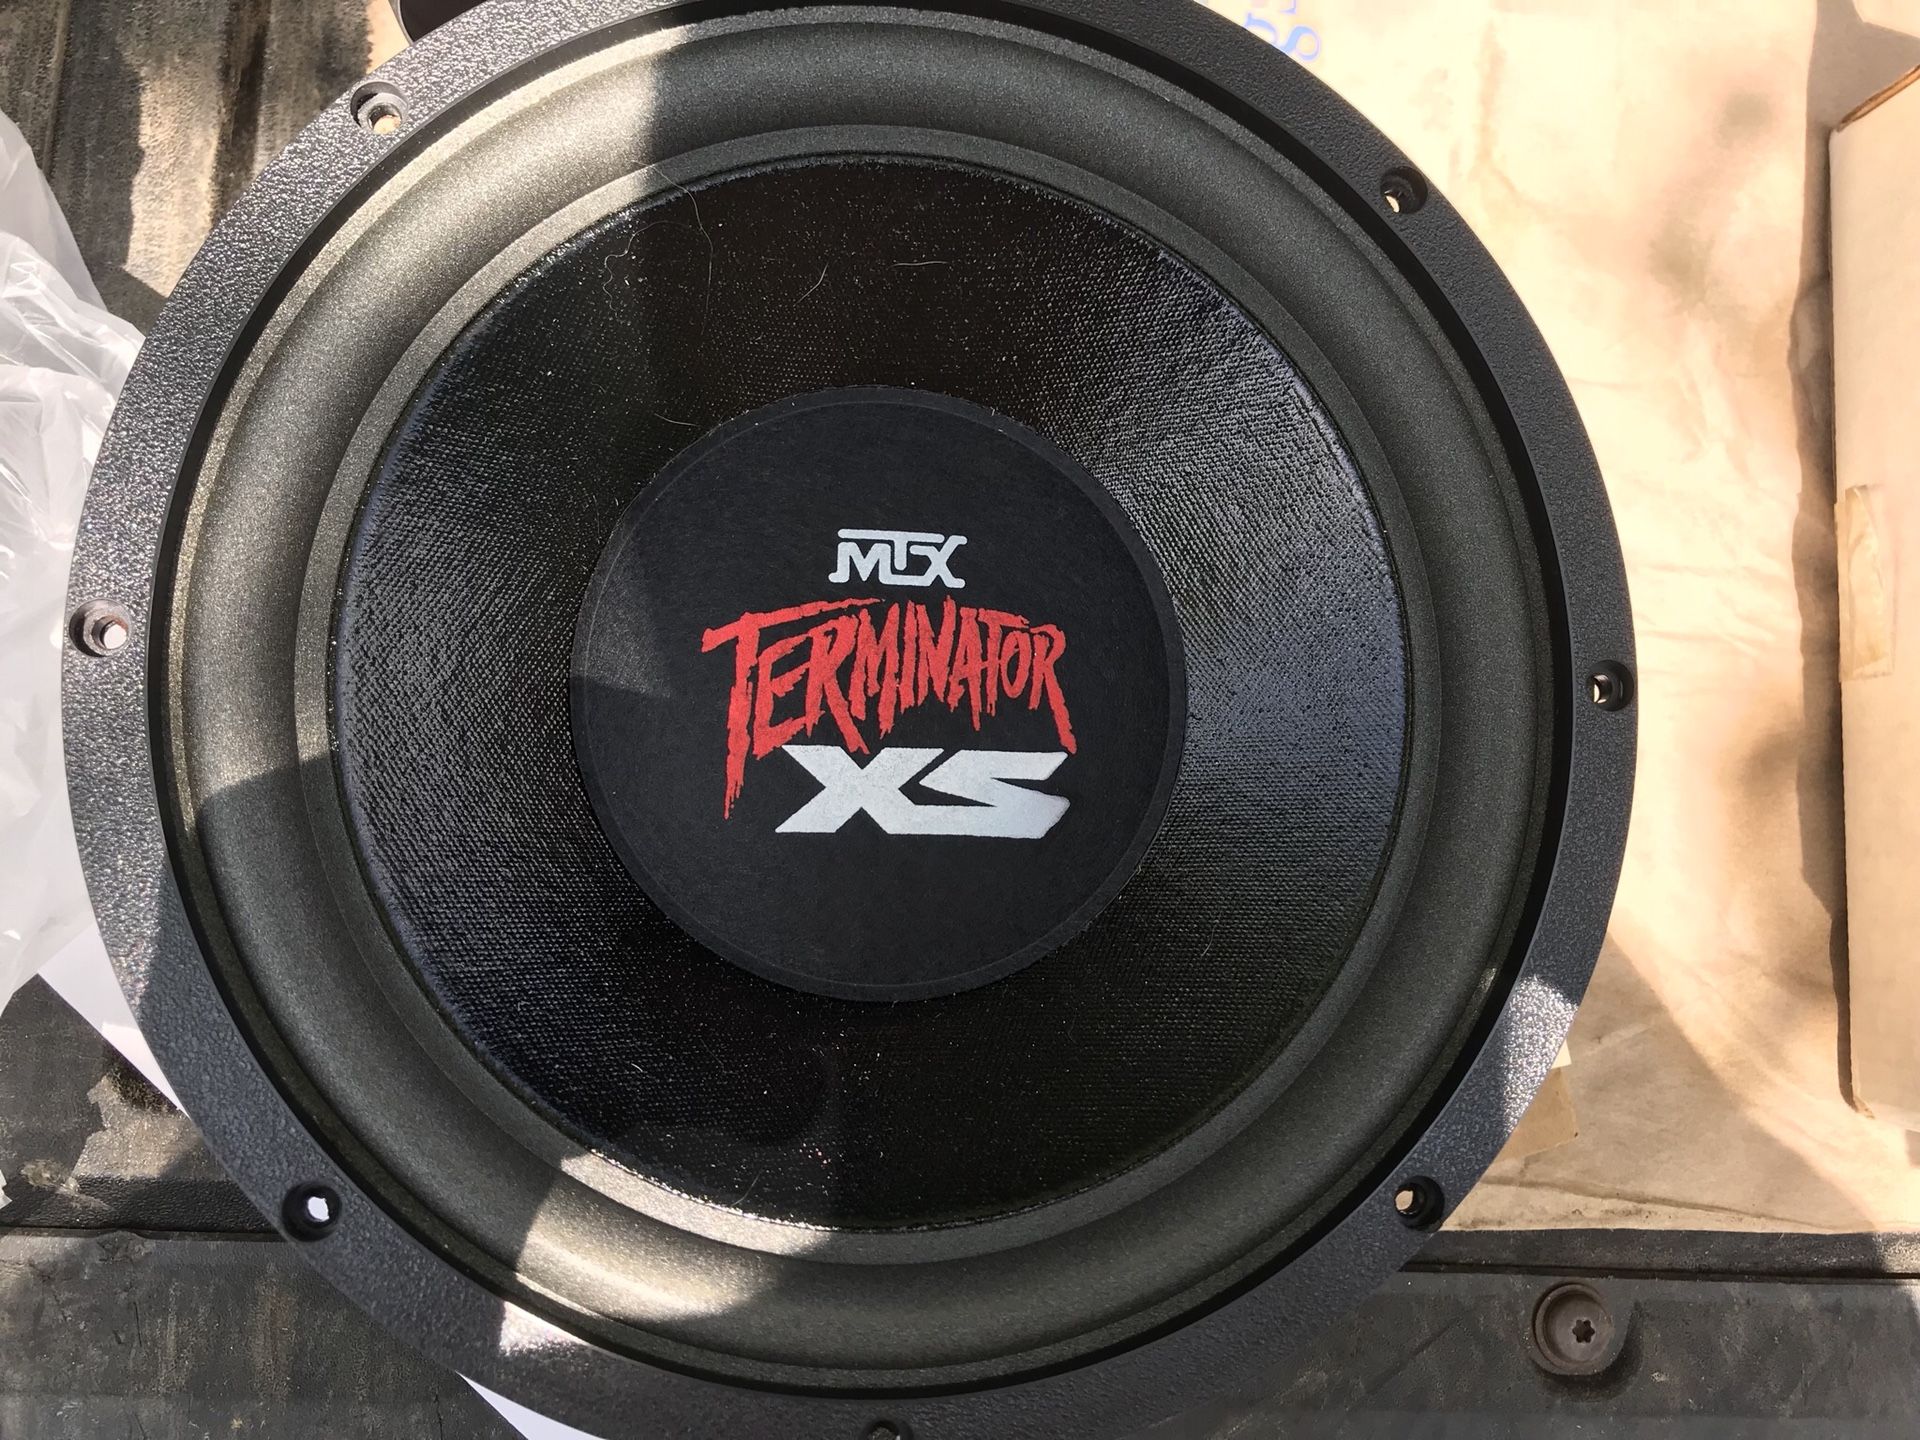 MTX Terminator 10” subwoofer